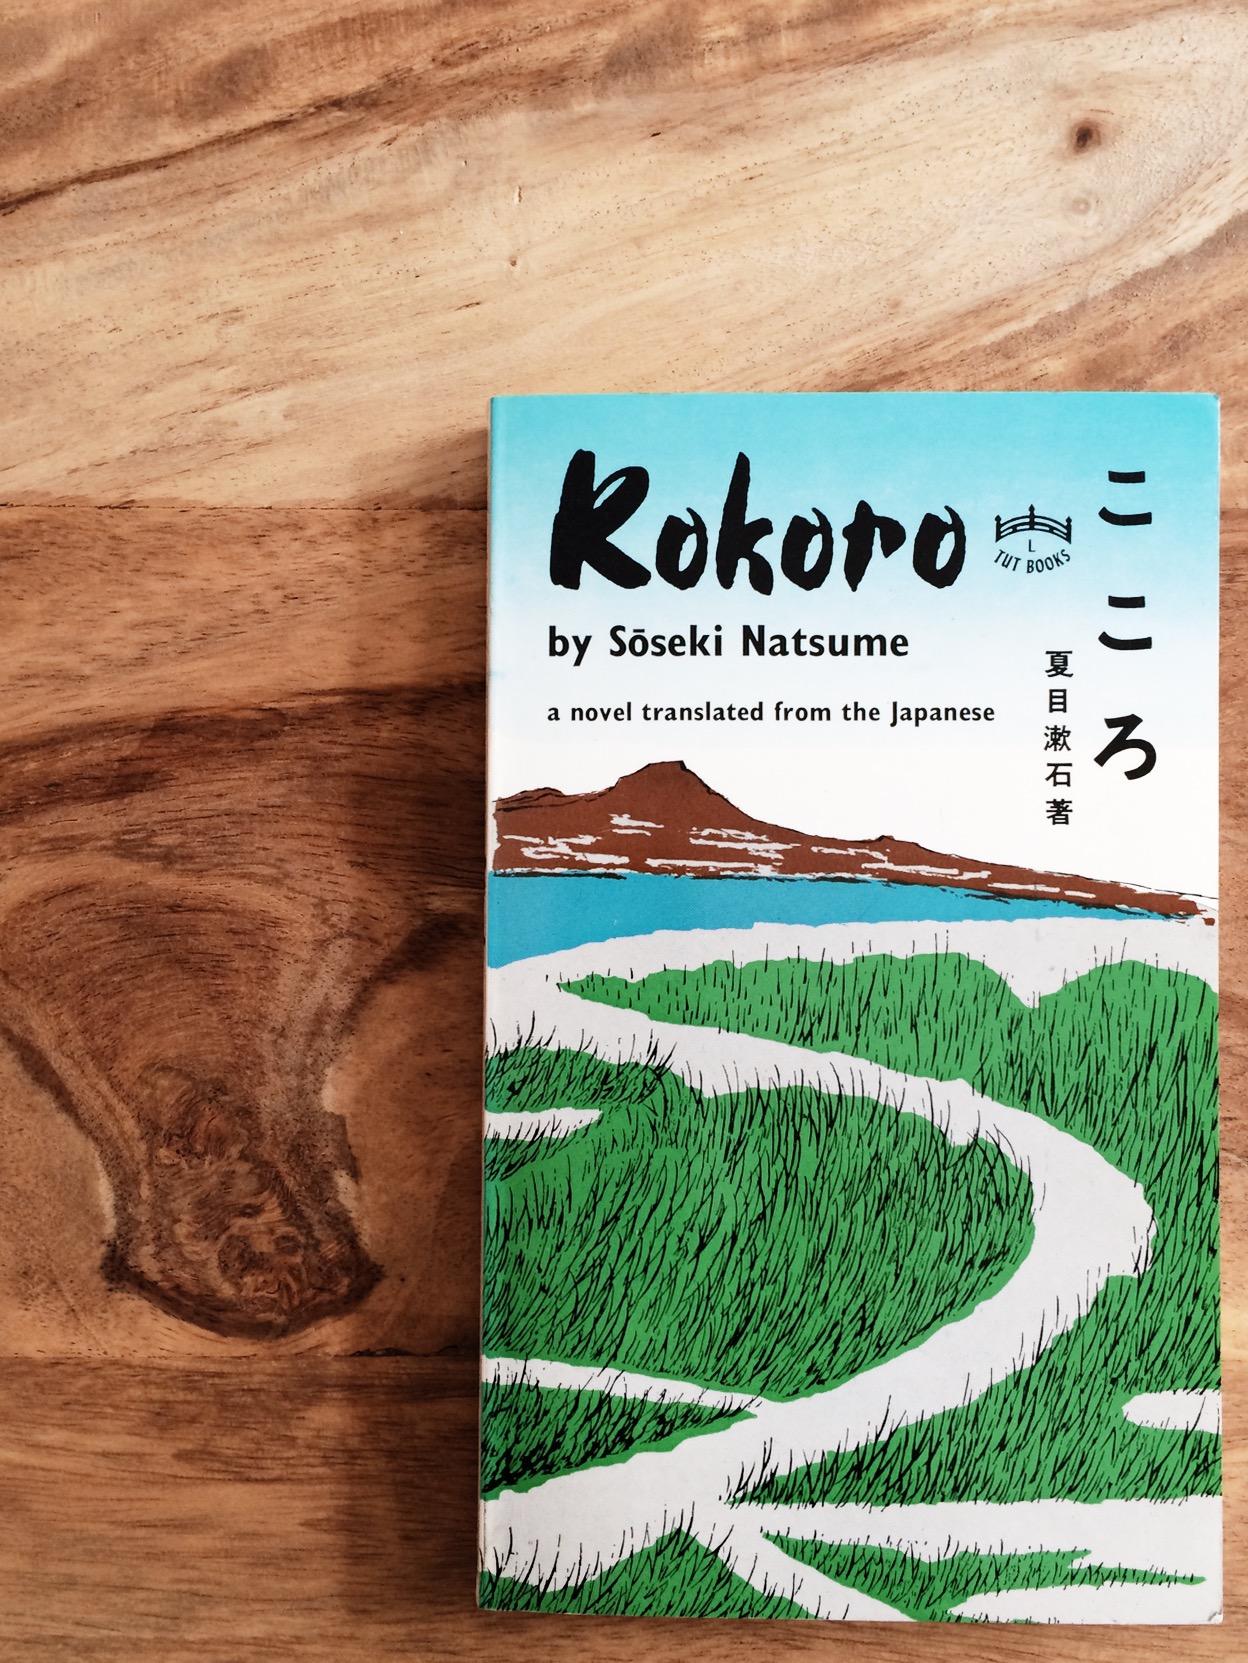 What is Kokoro? The Concept of Kokoro 